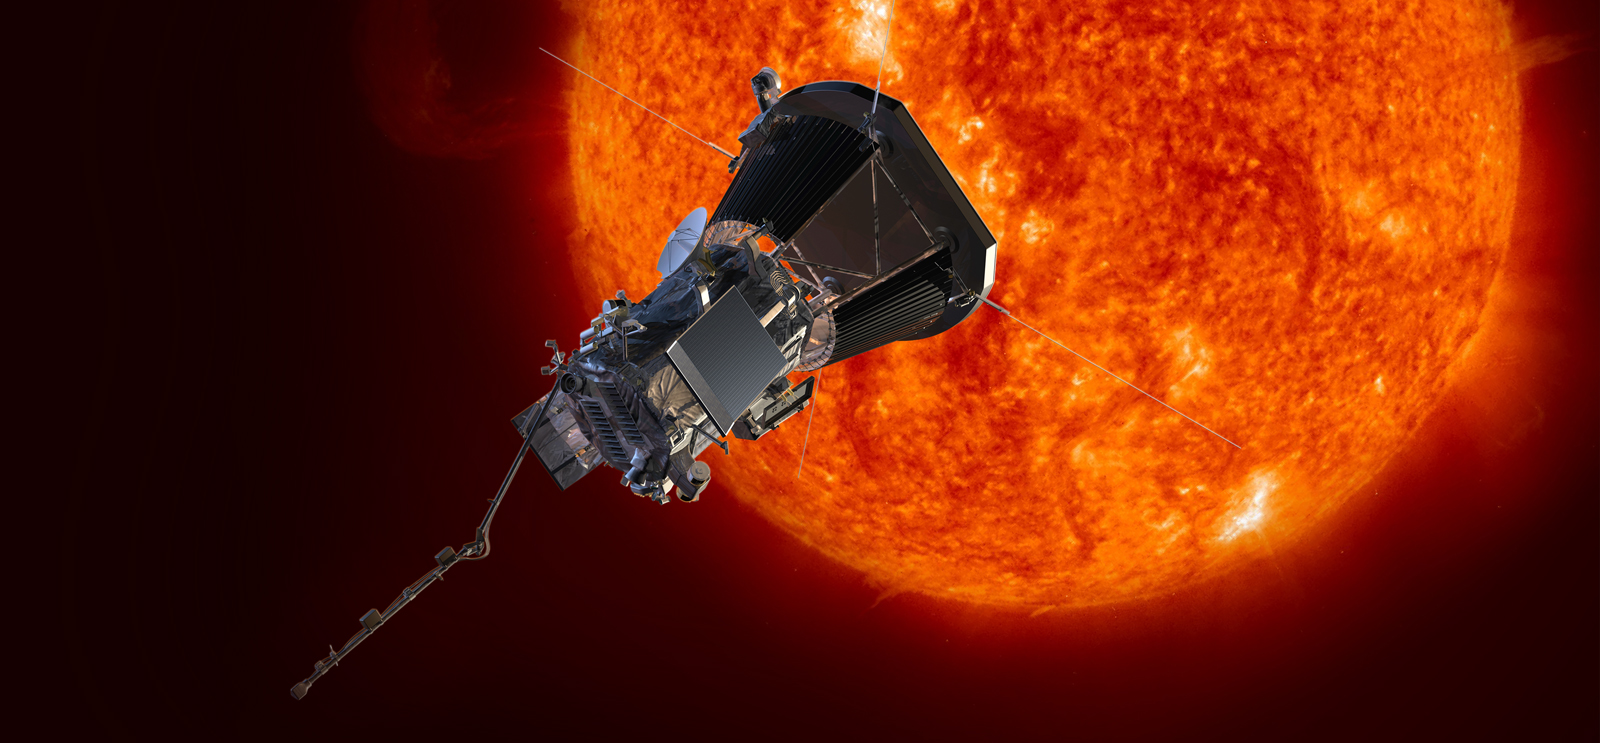 NASA’s Parker Solar Probe